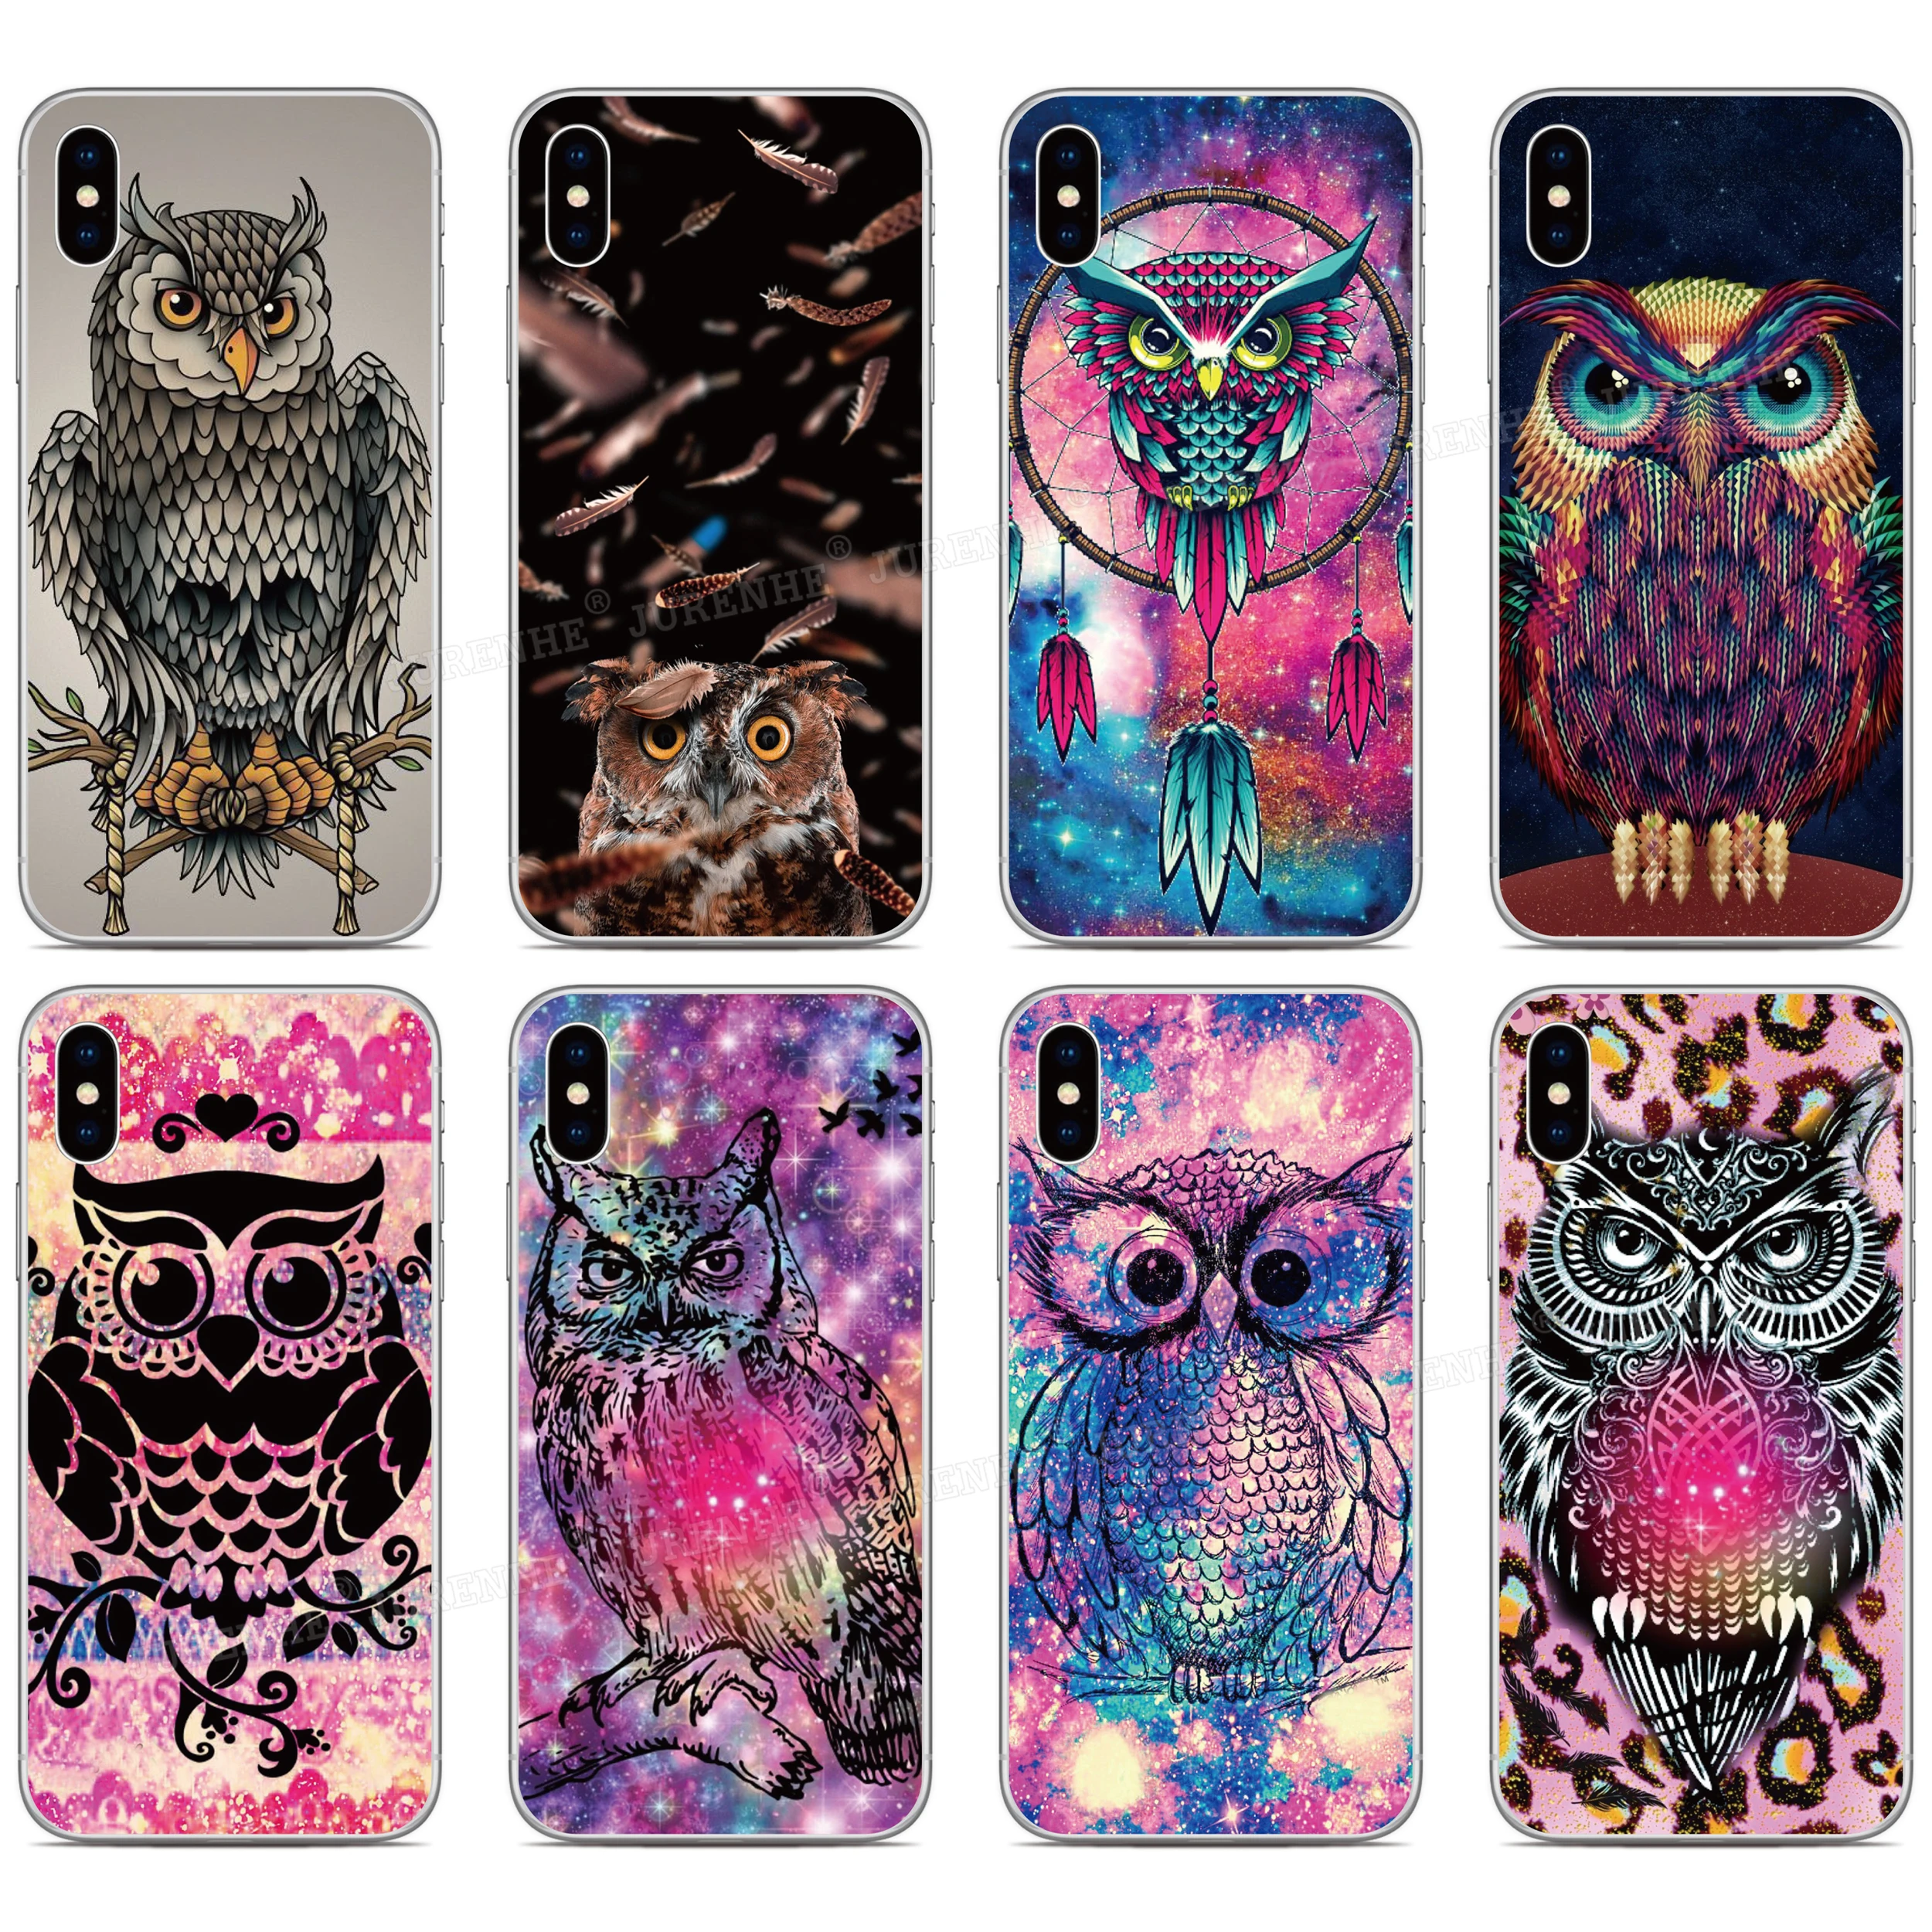 

Cute Art Owl Phone Cover Case For BQ Aquaris X2 X Pro U U2 Lite V X5 E5 M5 E5s C VS Vsmart JOY Active 1 Plus 5035 5059 Fundas